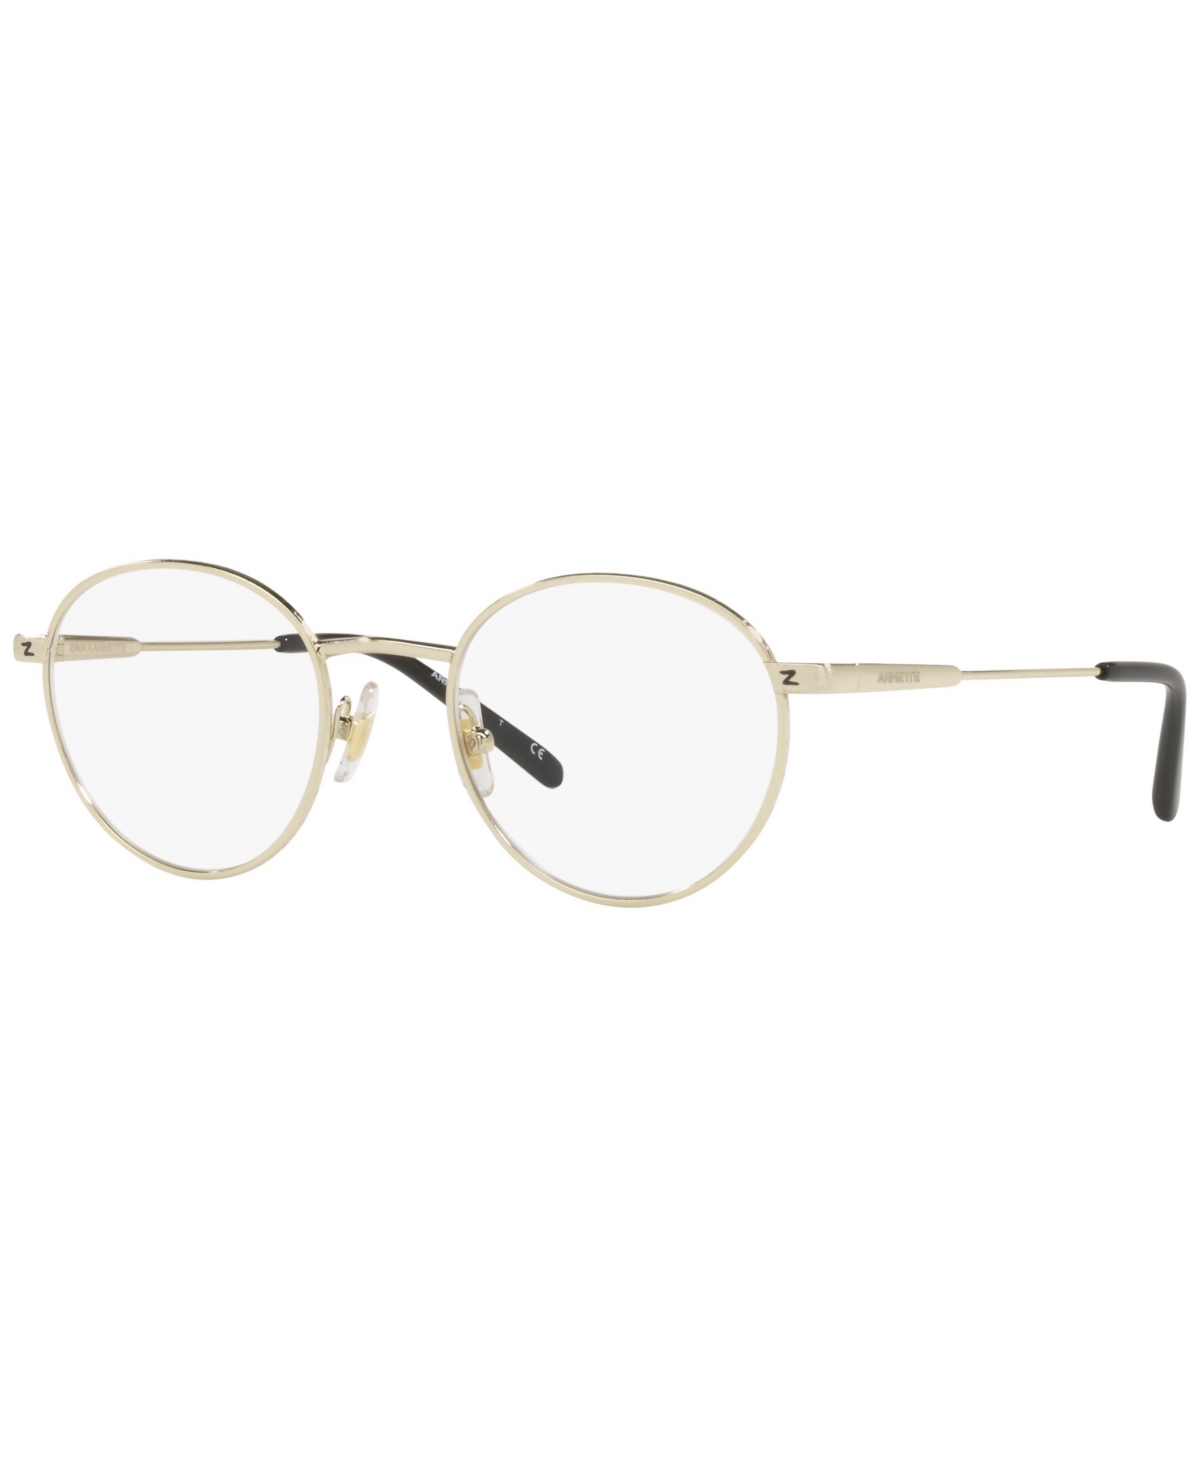 Arnette AN6132 The Professional Men's Phantos Eyeglasses